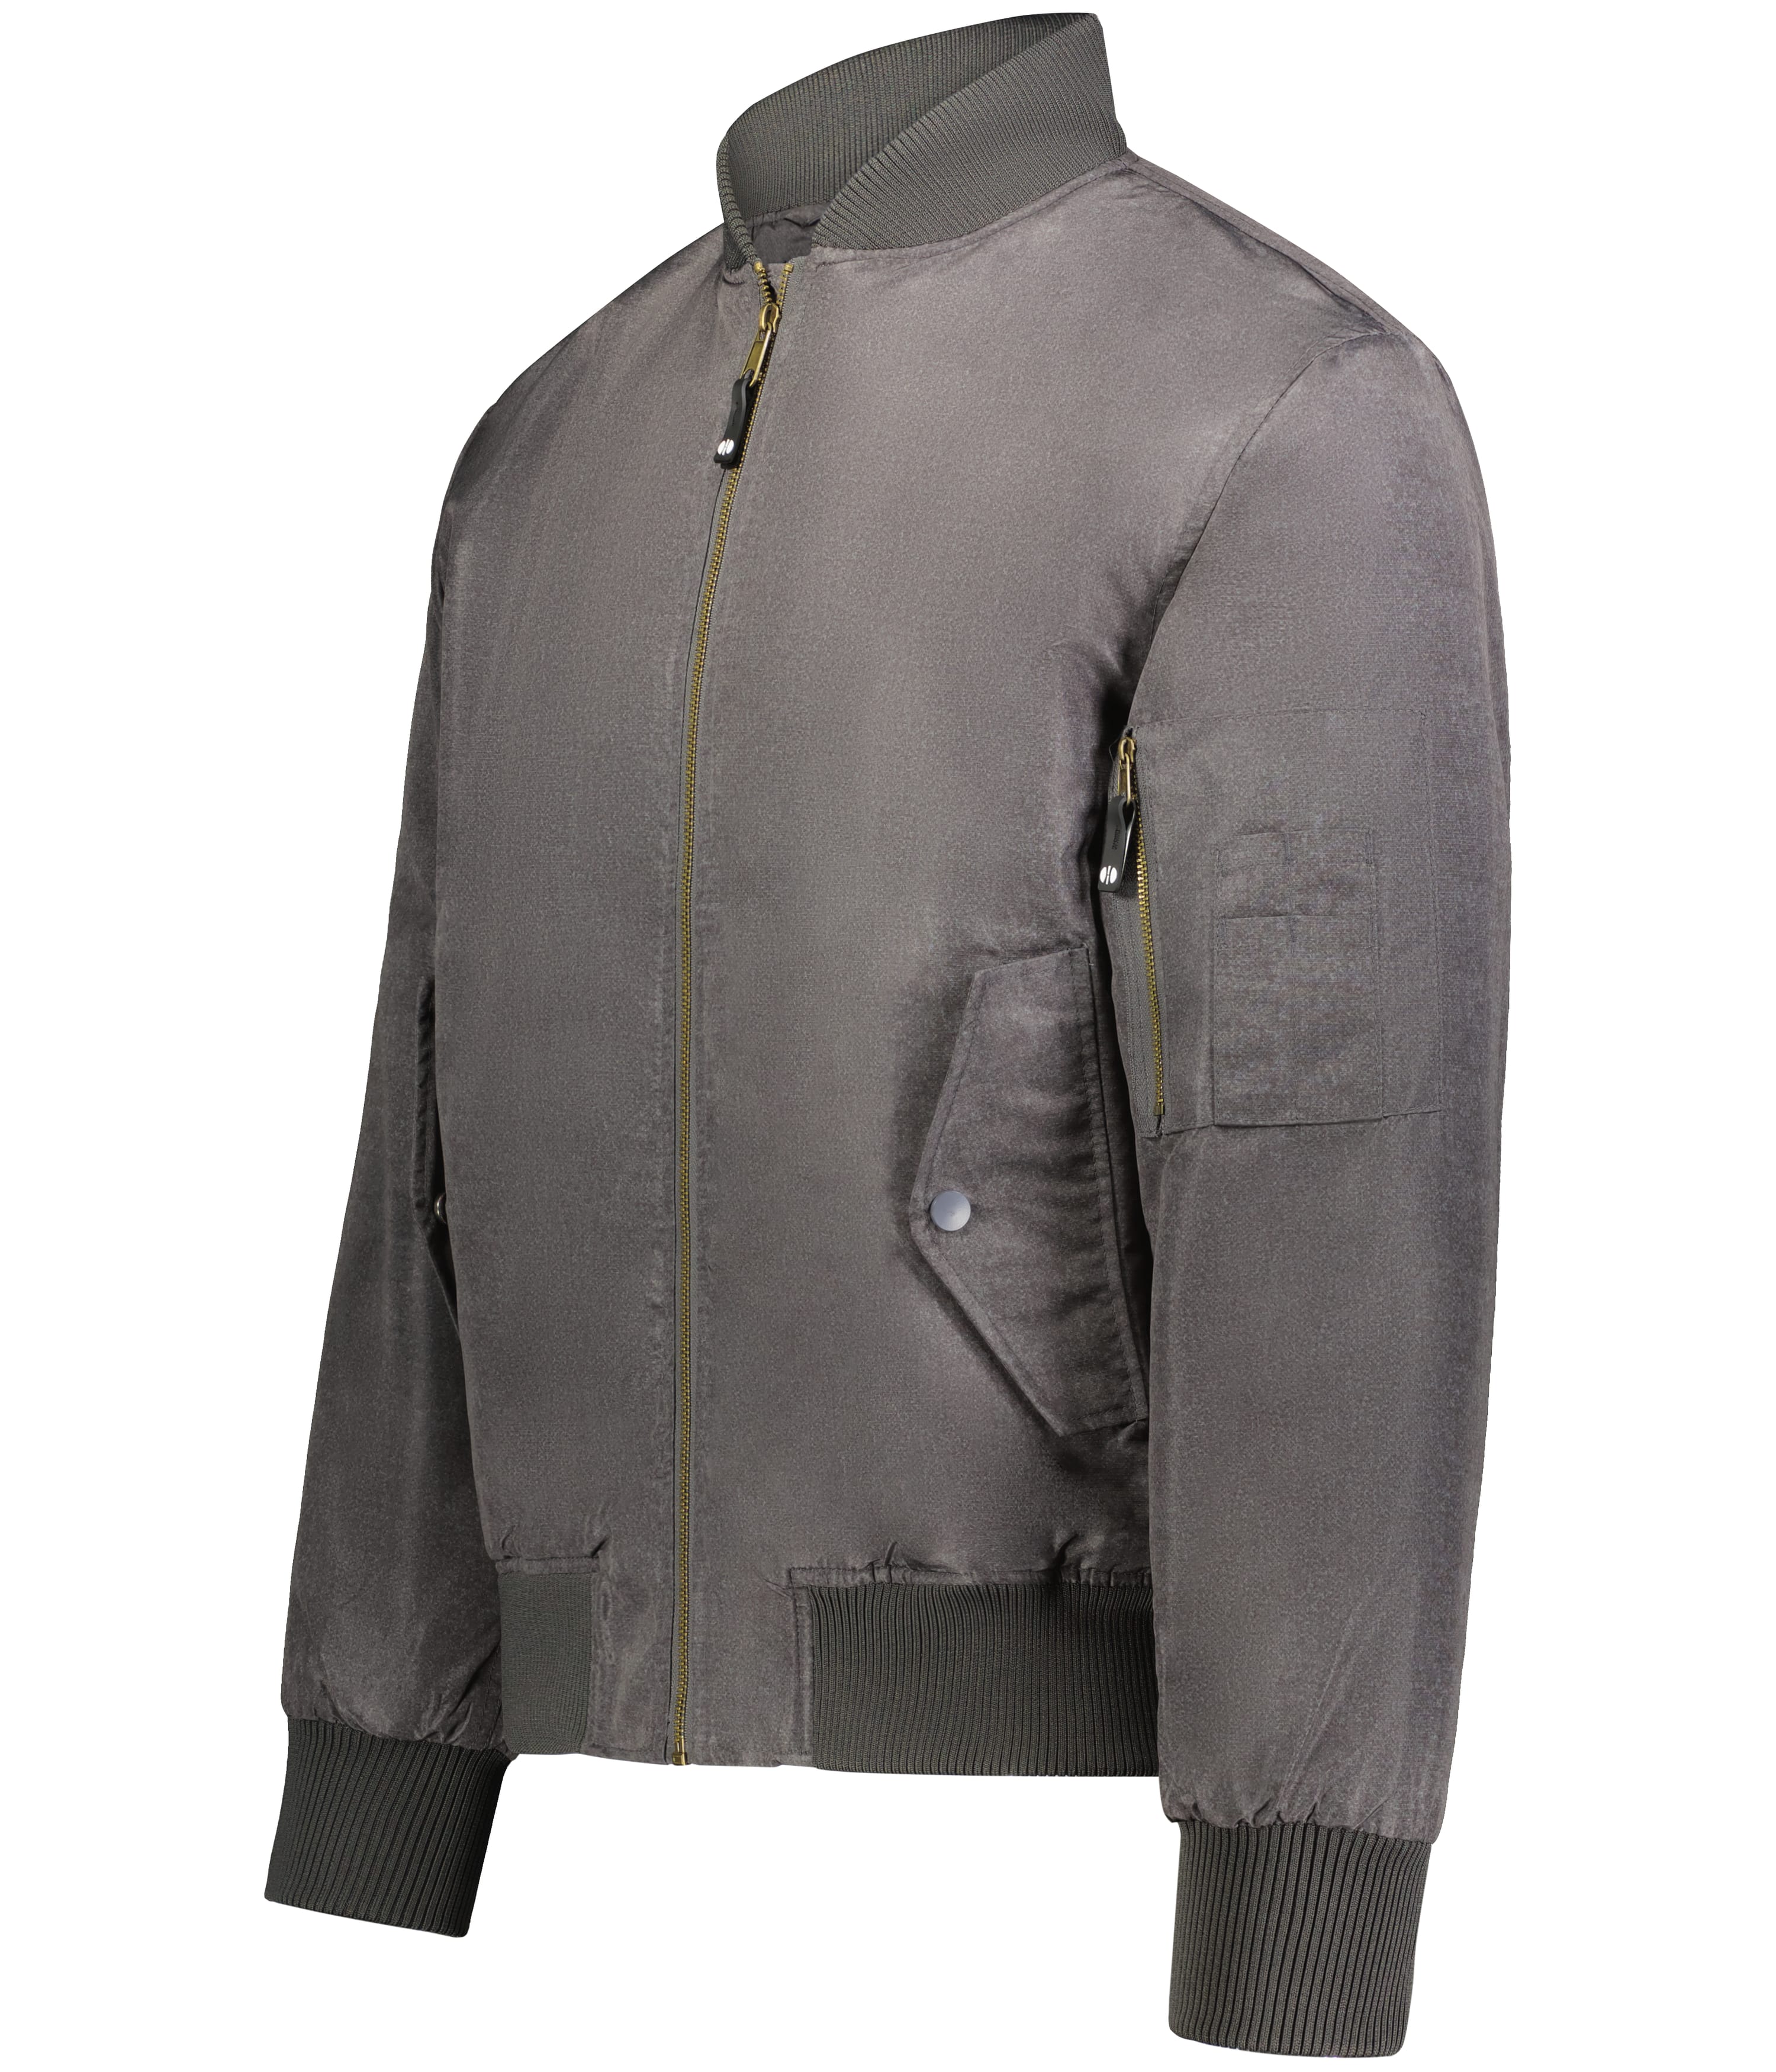 Holloway Sportswear L Flight Bomber Jacket Carbon Print 229532 - image 1 of 4